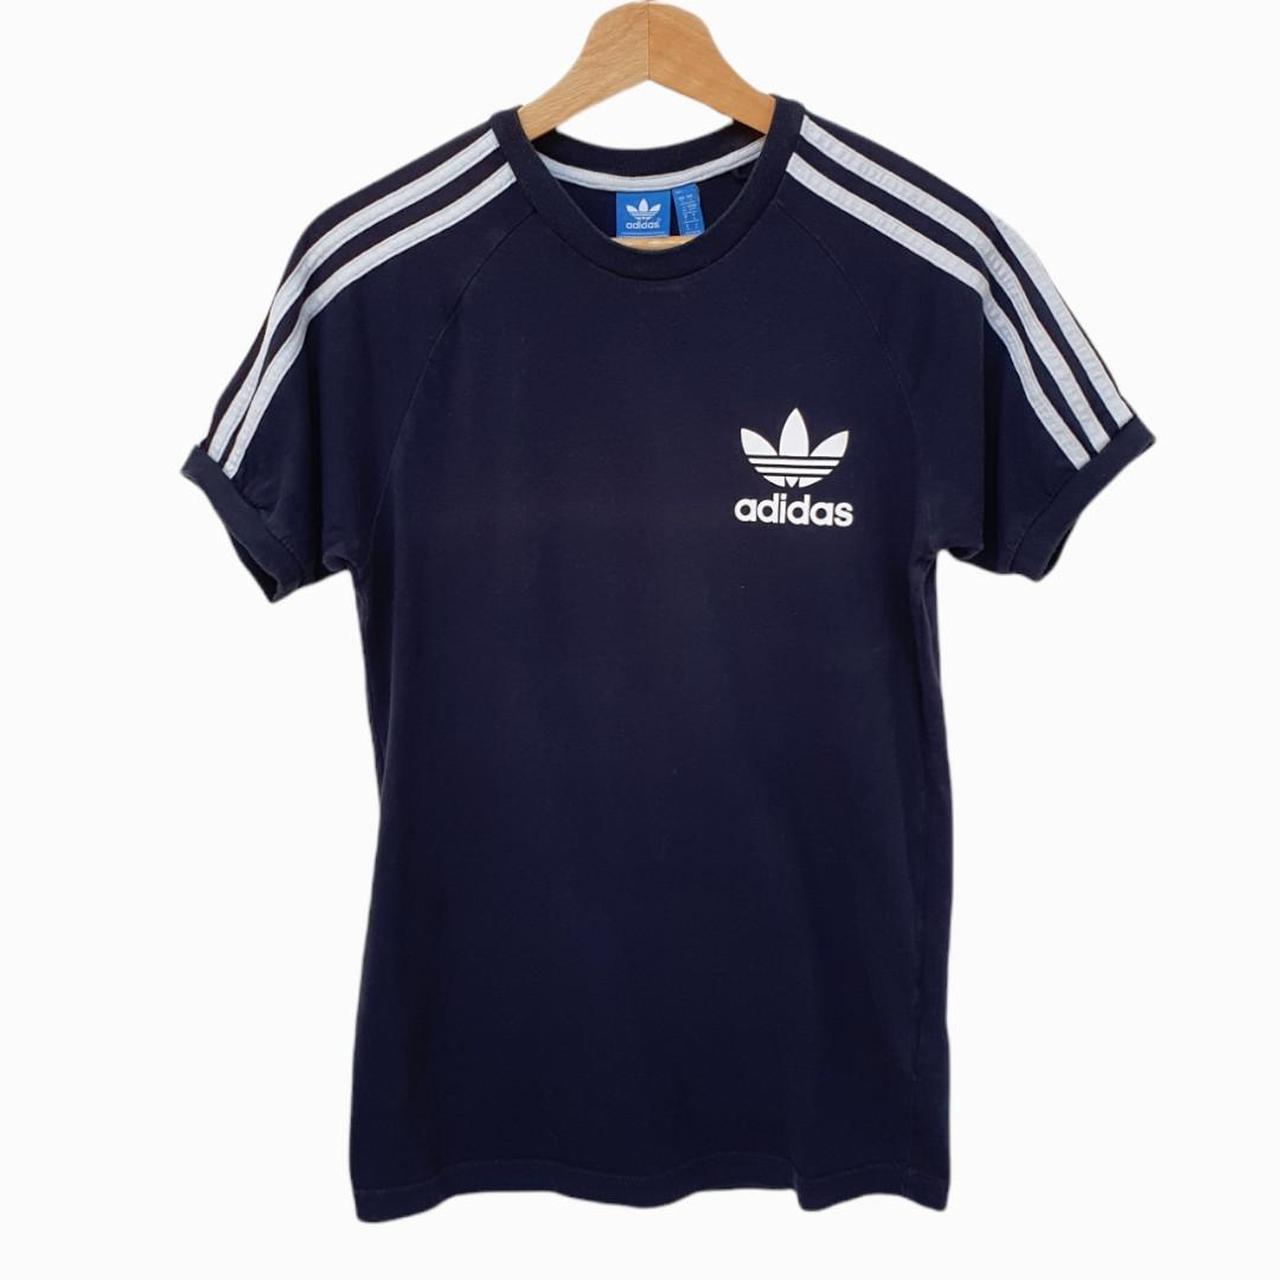 Retro Adidas Blue T-Shirt Size S 17.5